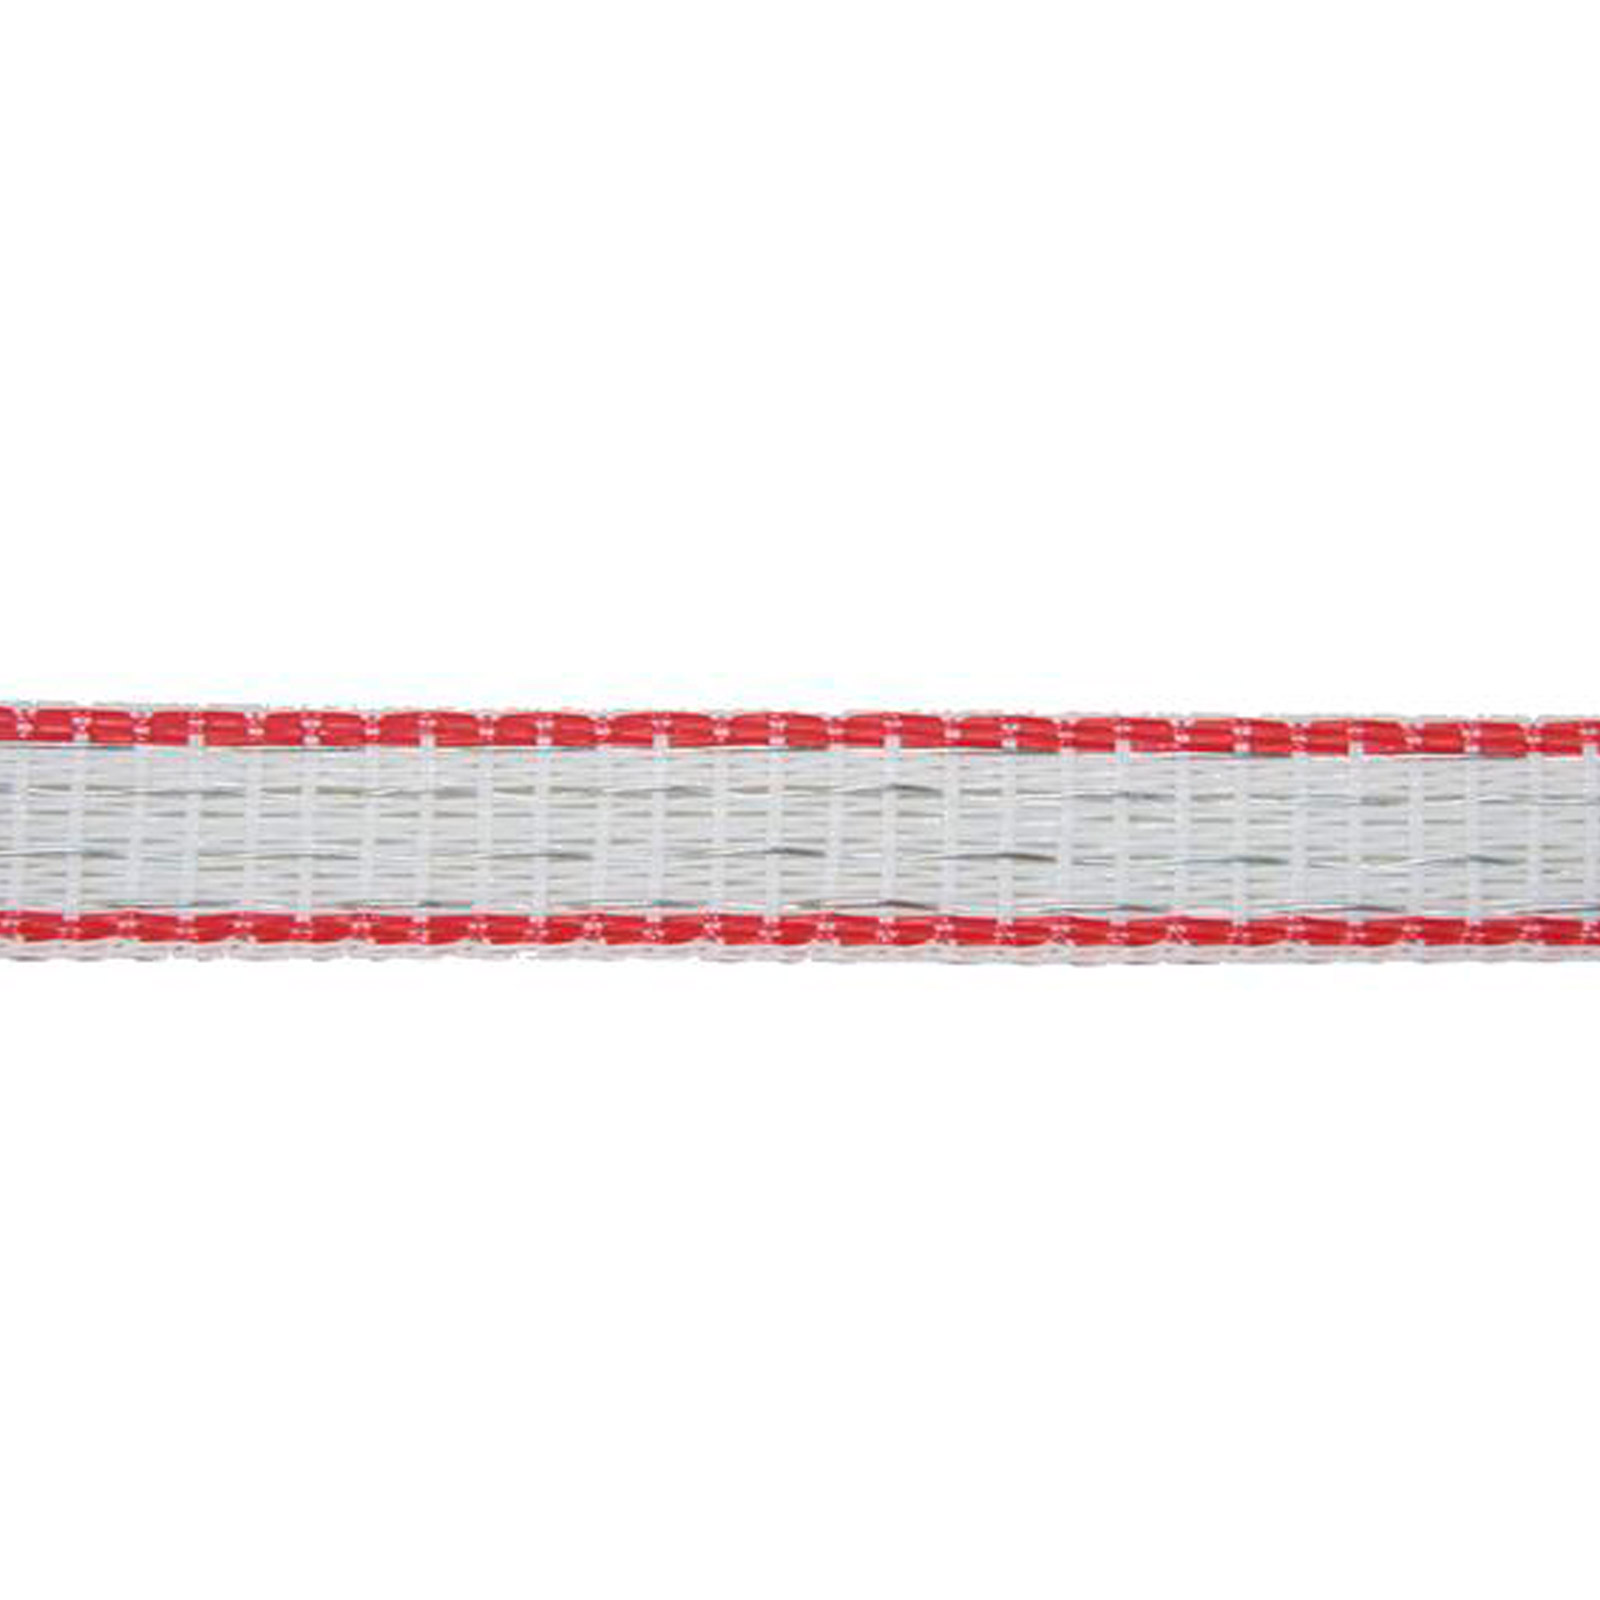 Agrarzone Weidezaunband Premium 0.30 TriCOND, weiß-rot 200 m x 12 mm